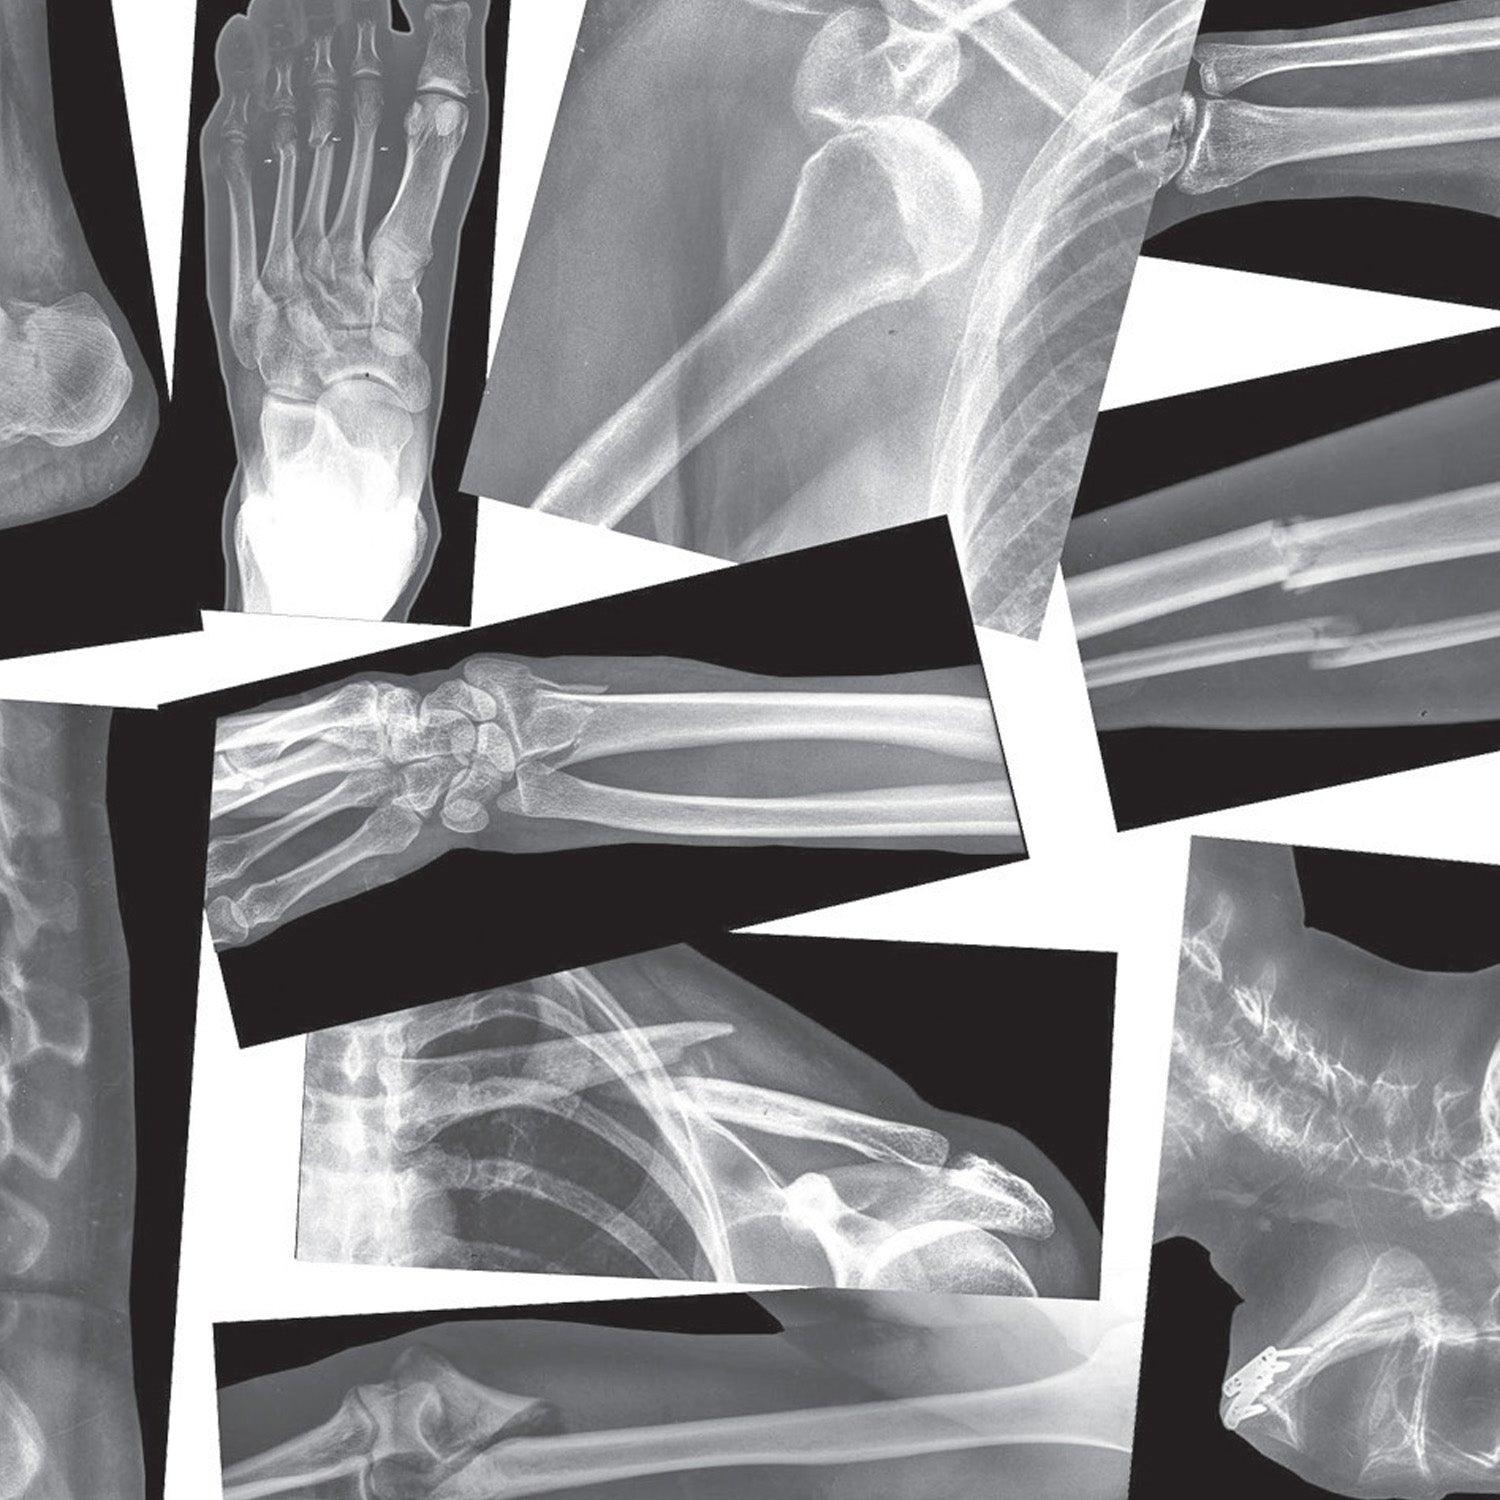 Broken Bones X-Ray Set, Pack of 15 - Loomini